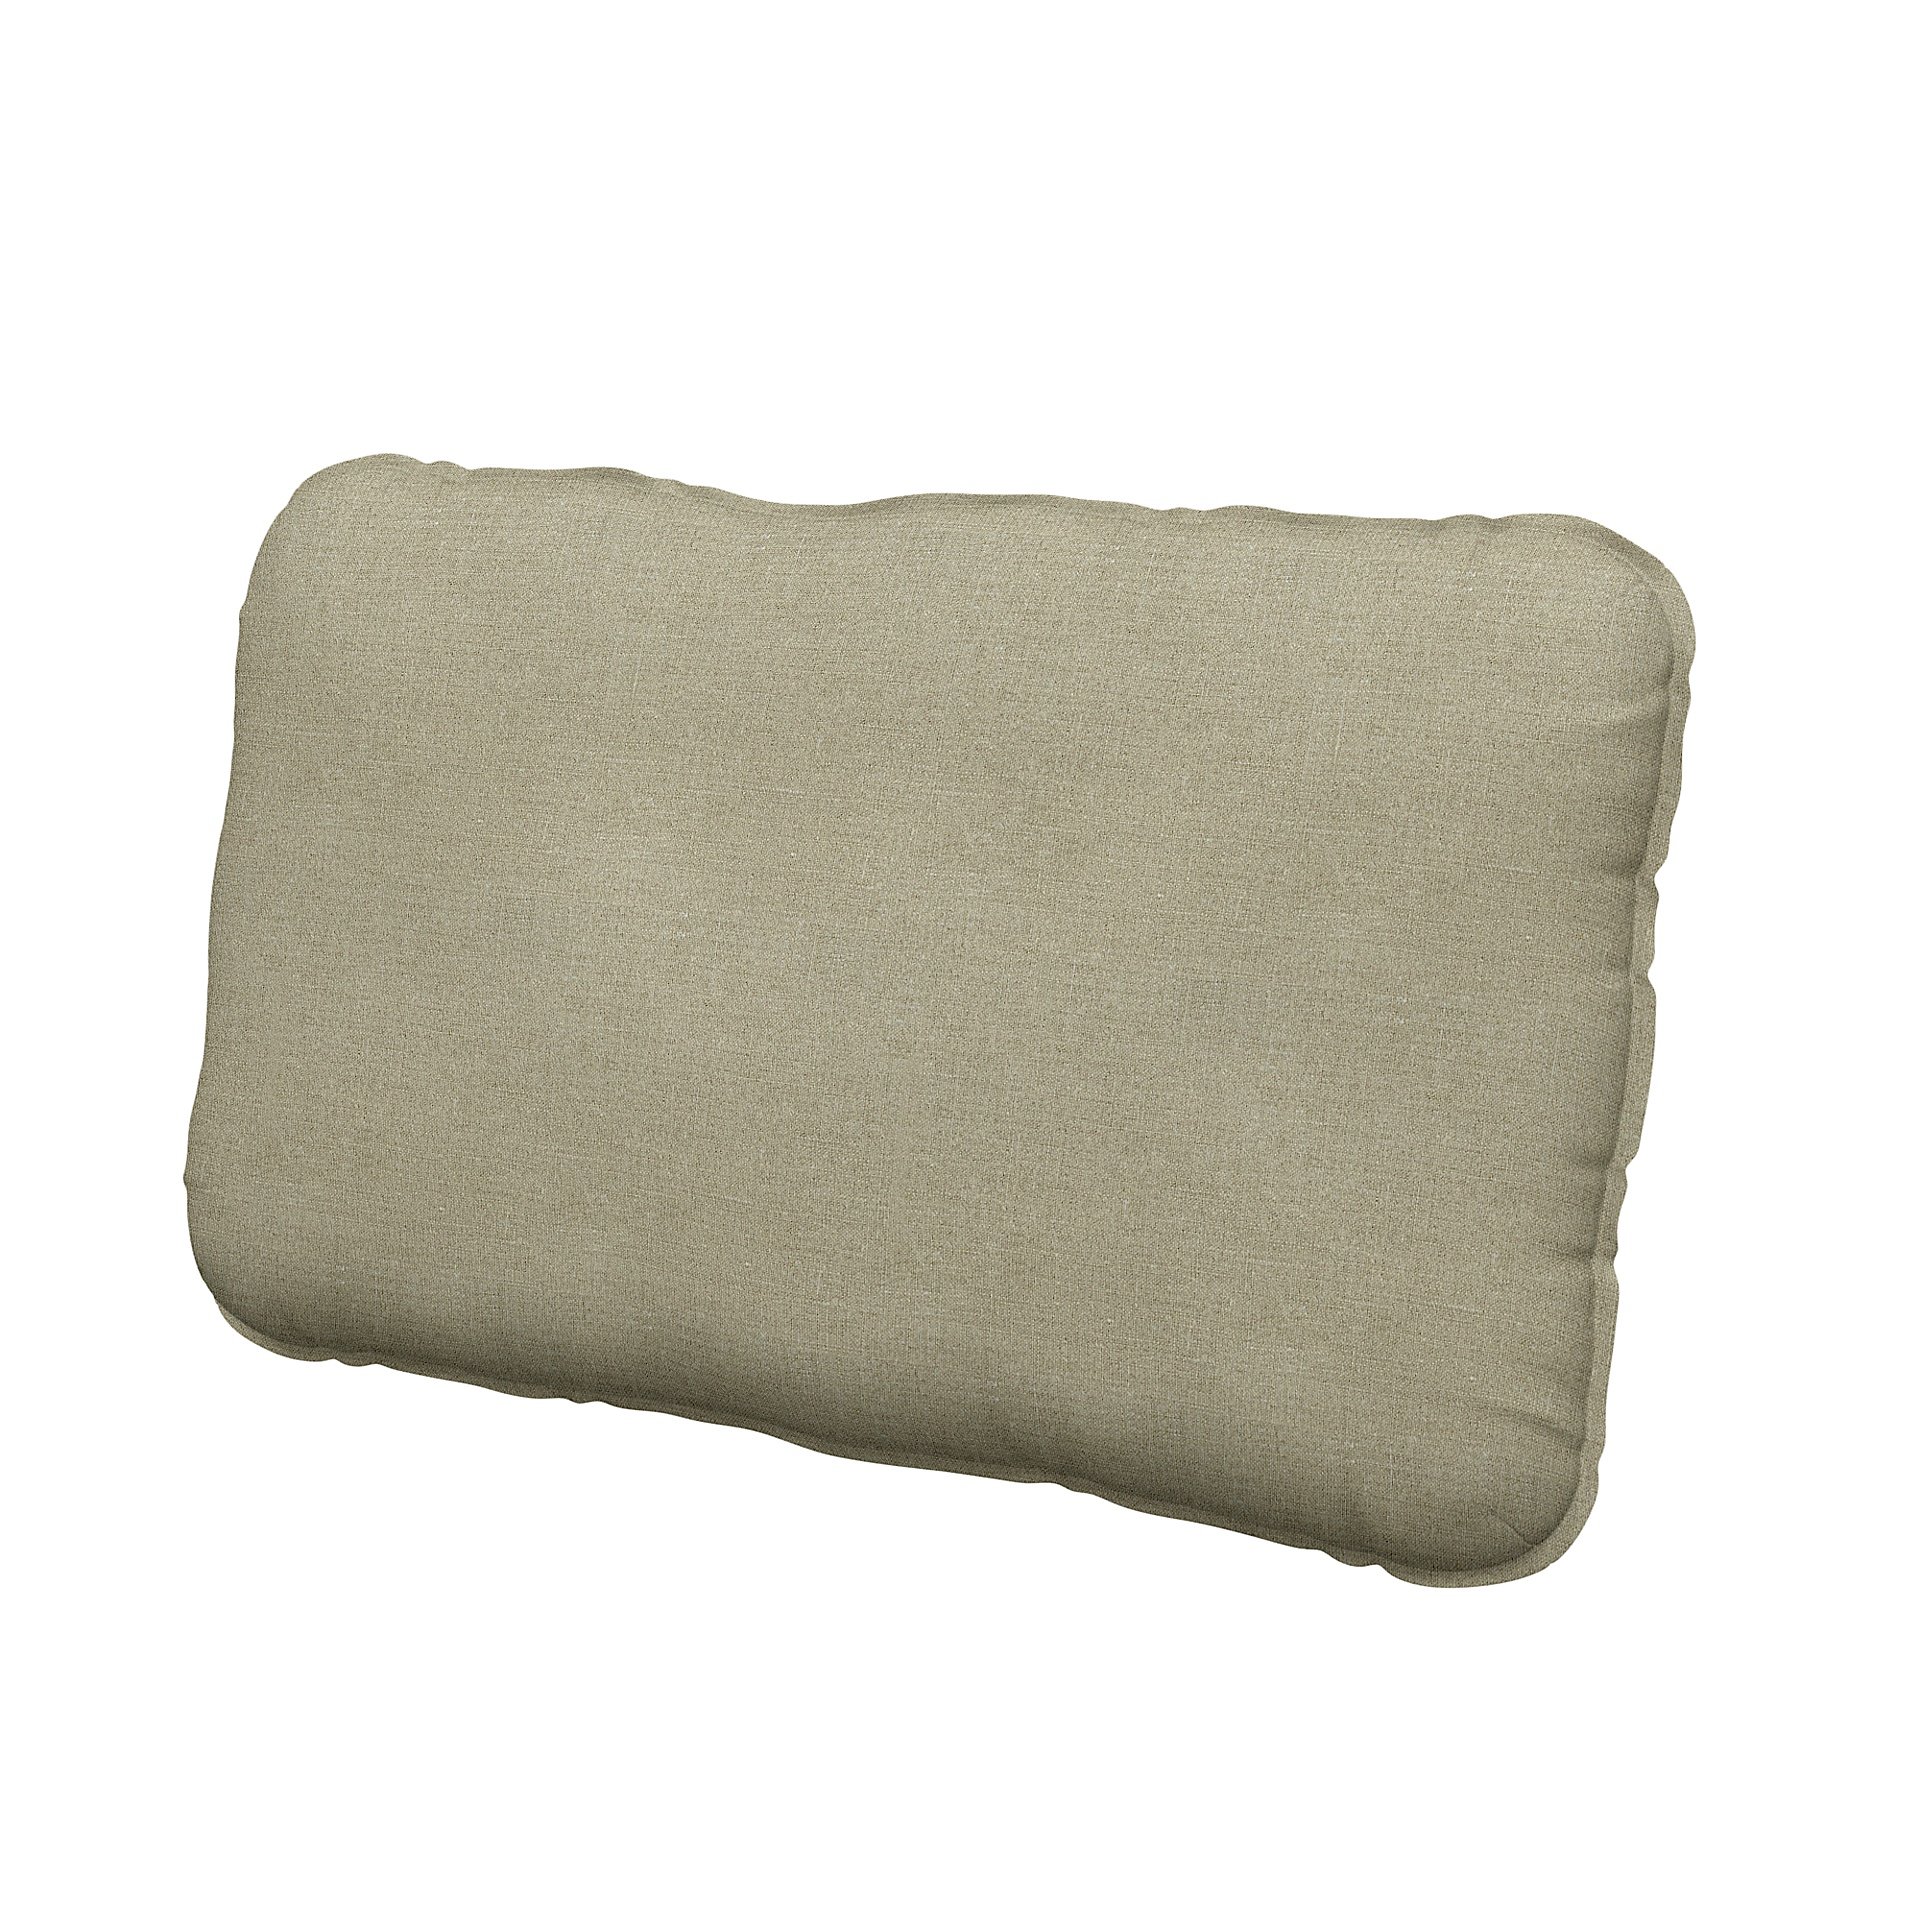 IKEA - Vallentuna back cushion cover 40x75cm, Pebble, Linen - Bemz